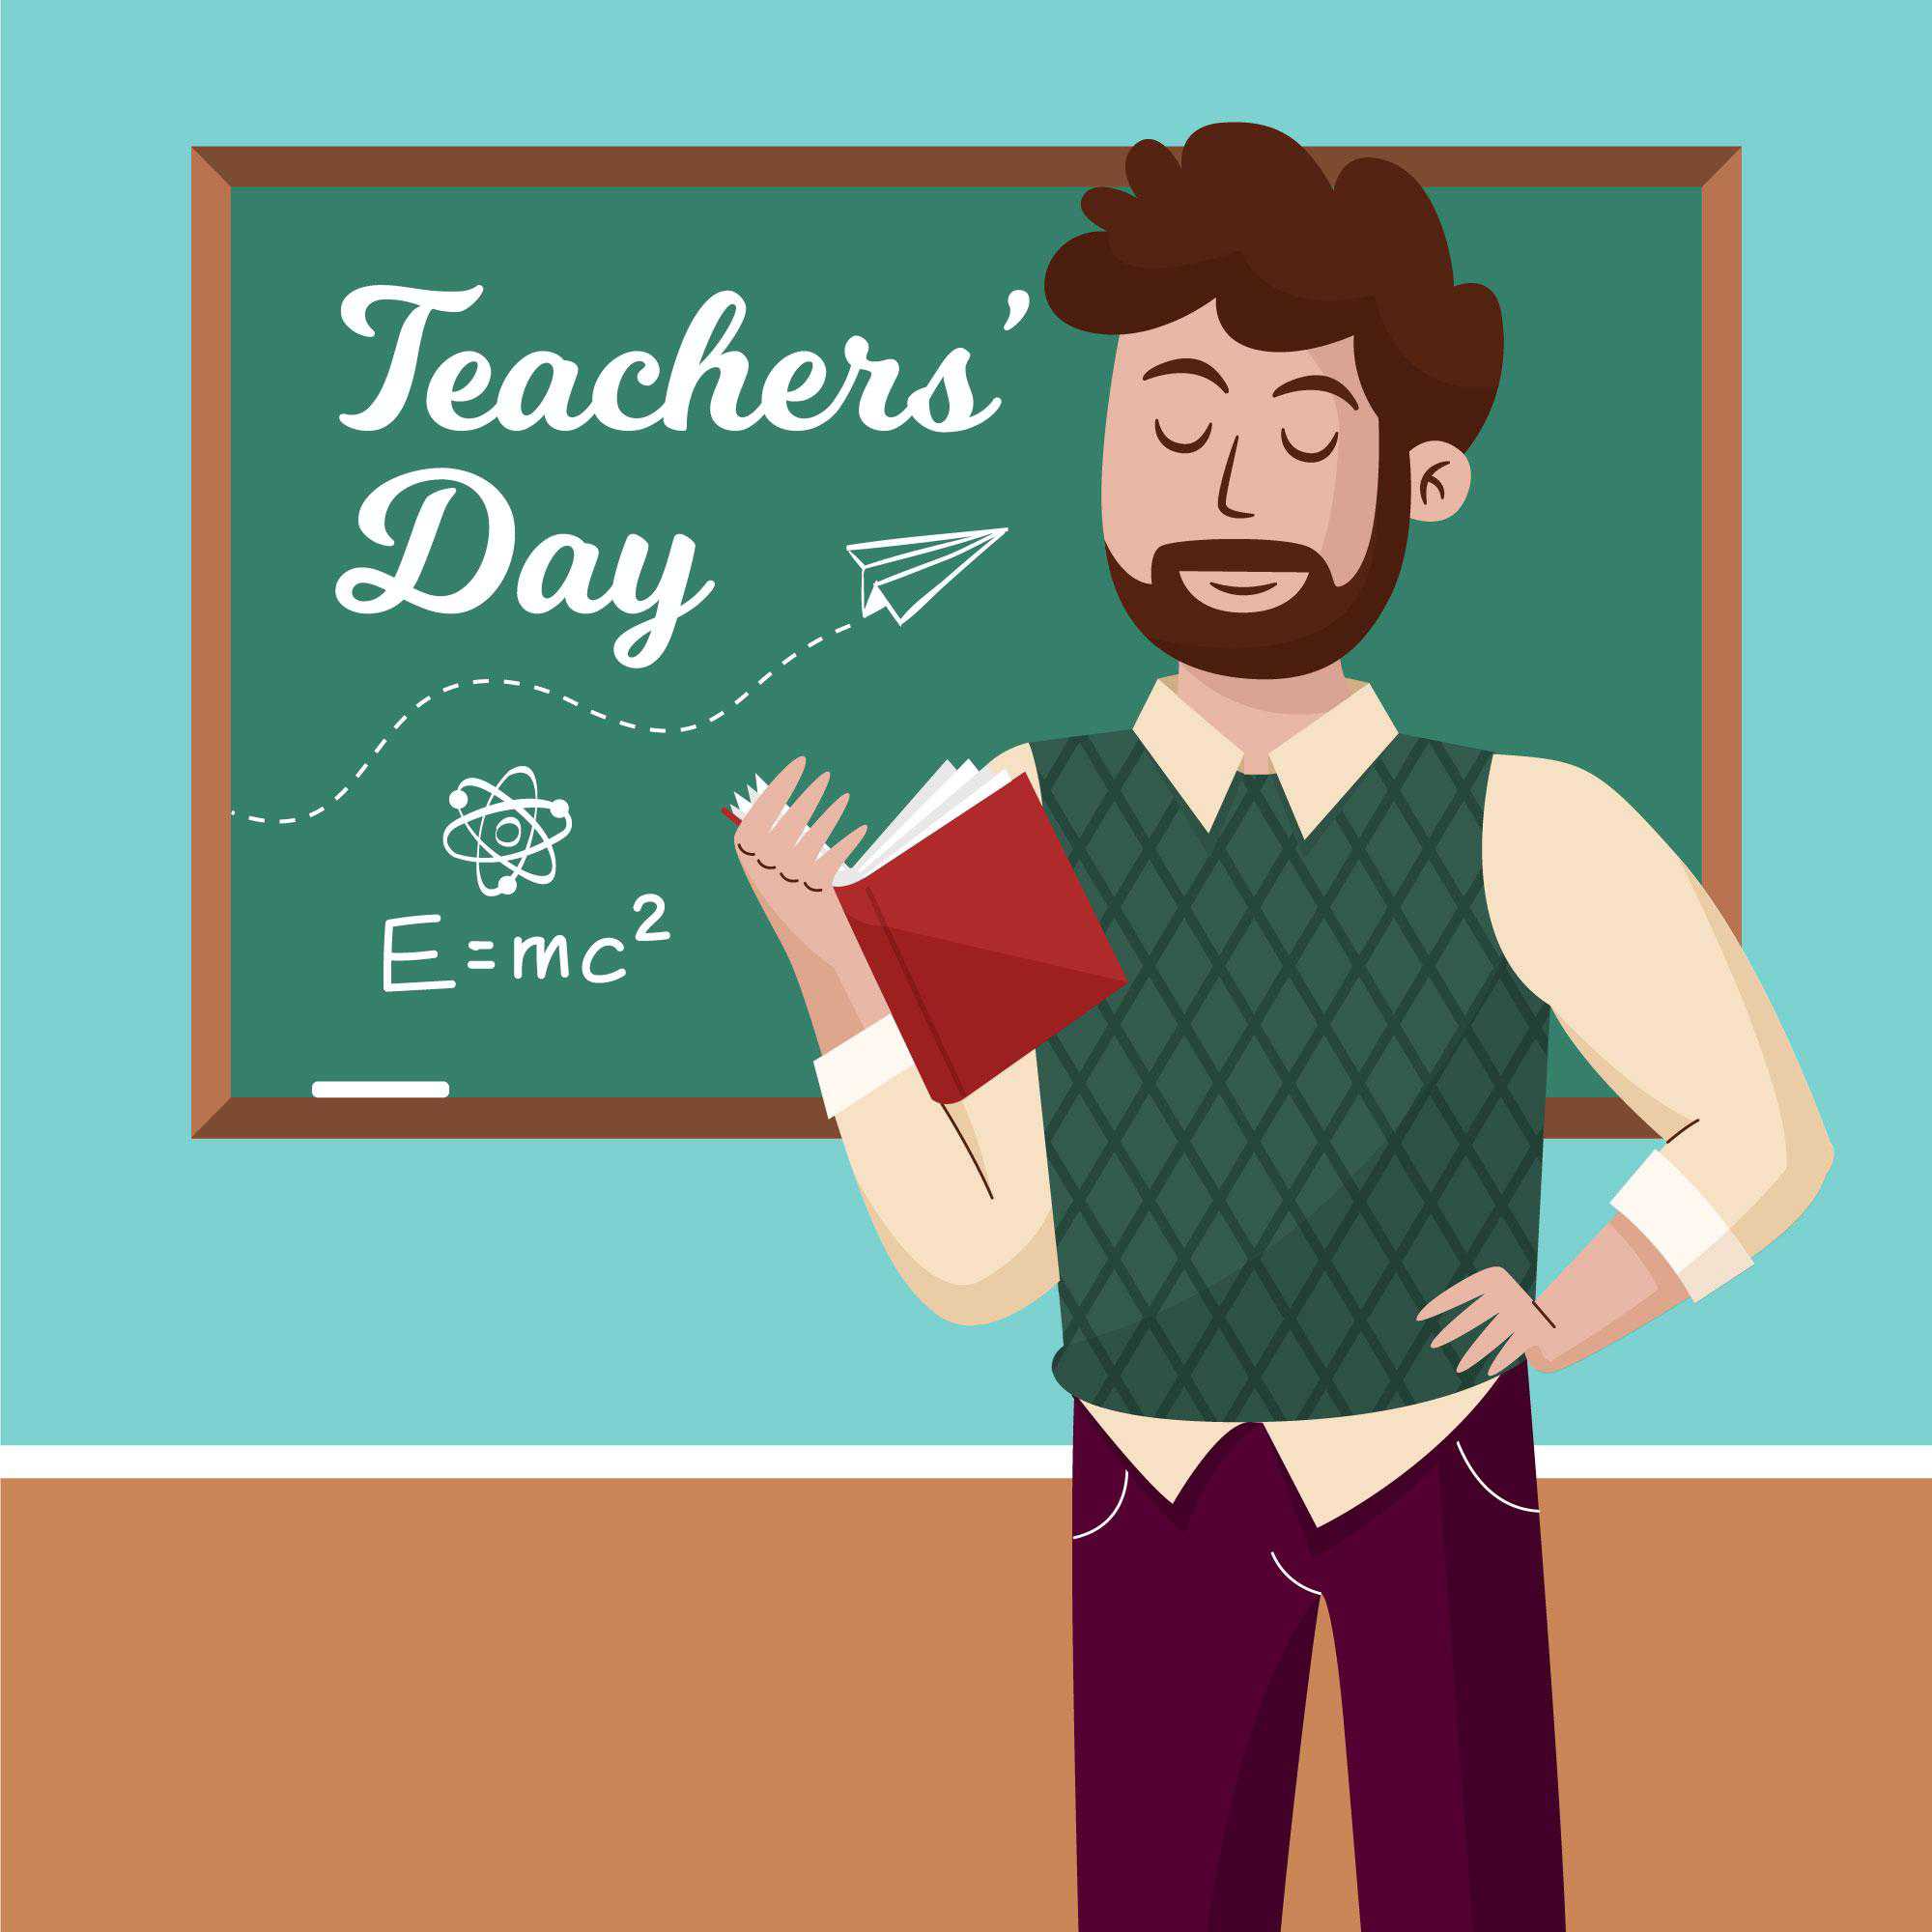 Happy Teacher's Day images